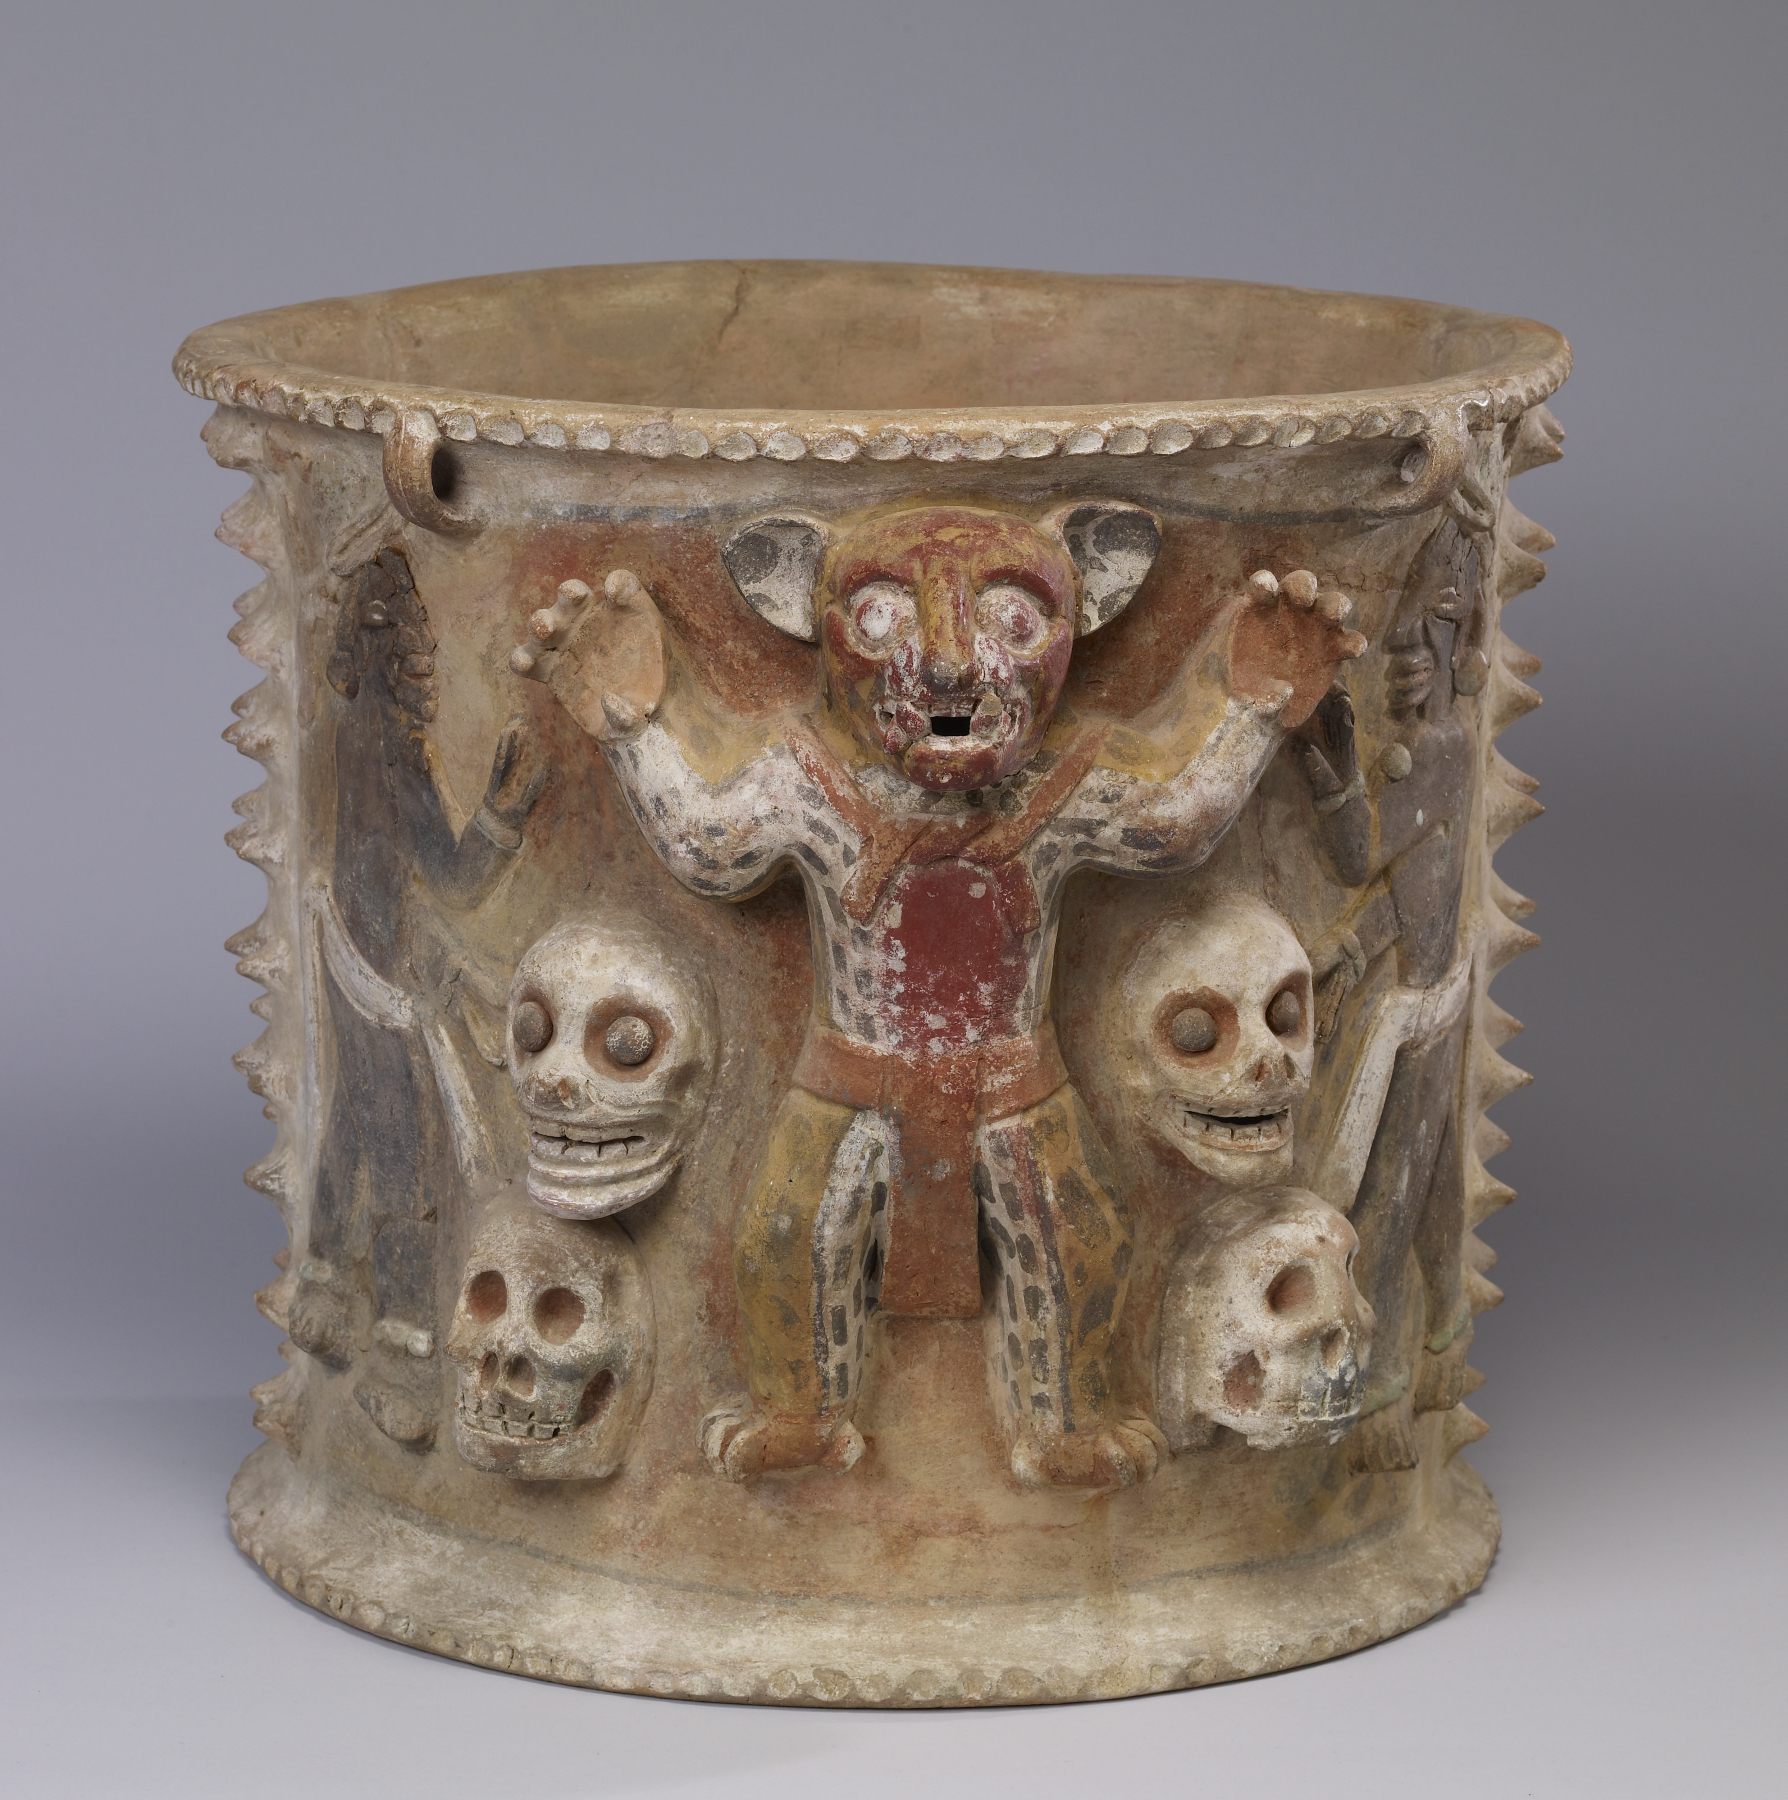 Image for Polychrome Figural Urn with Jaguars and Skulls